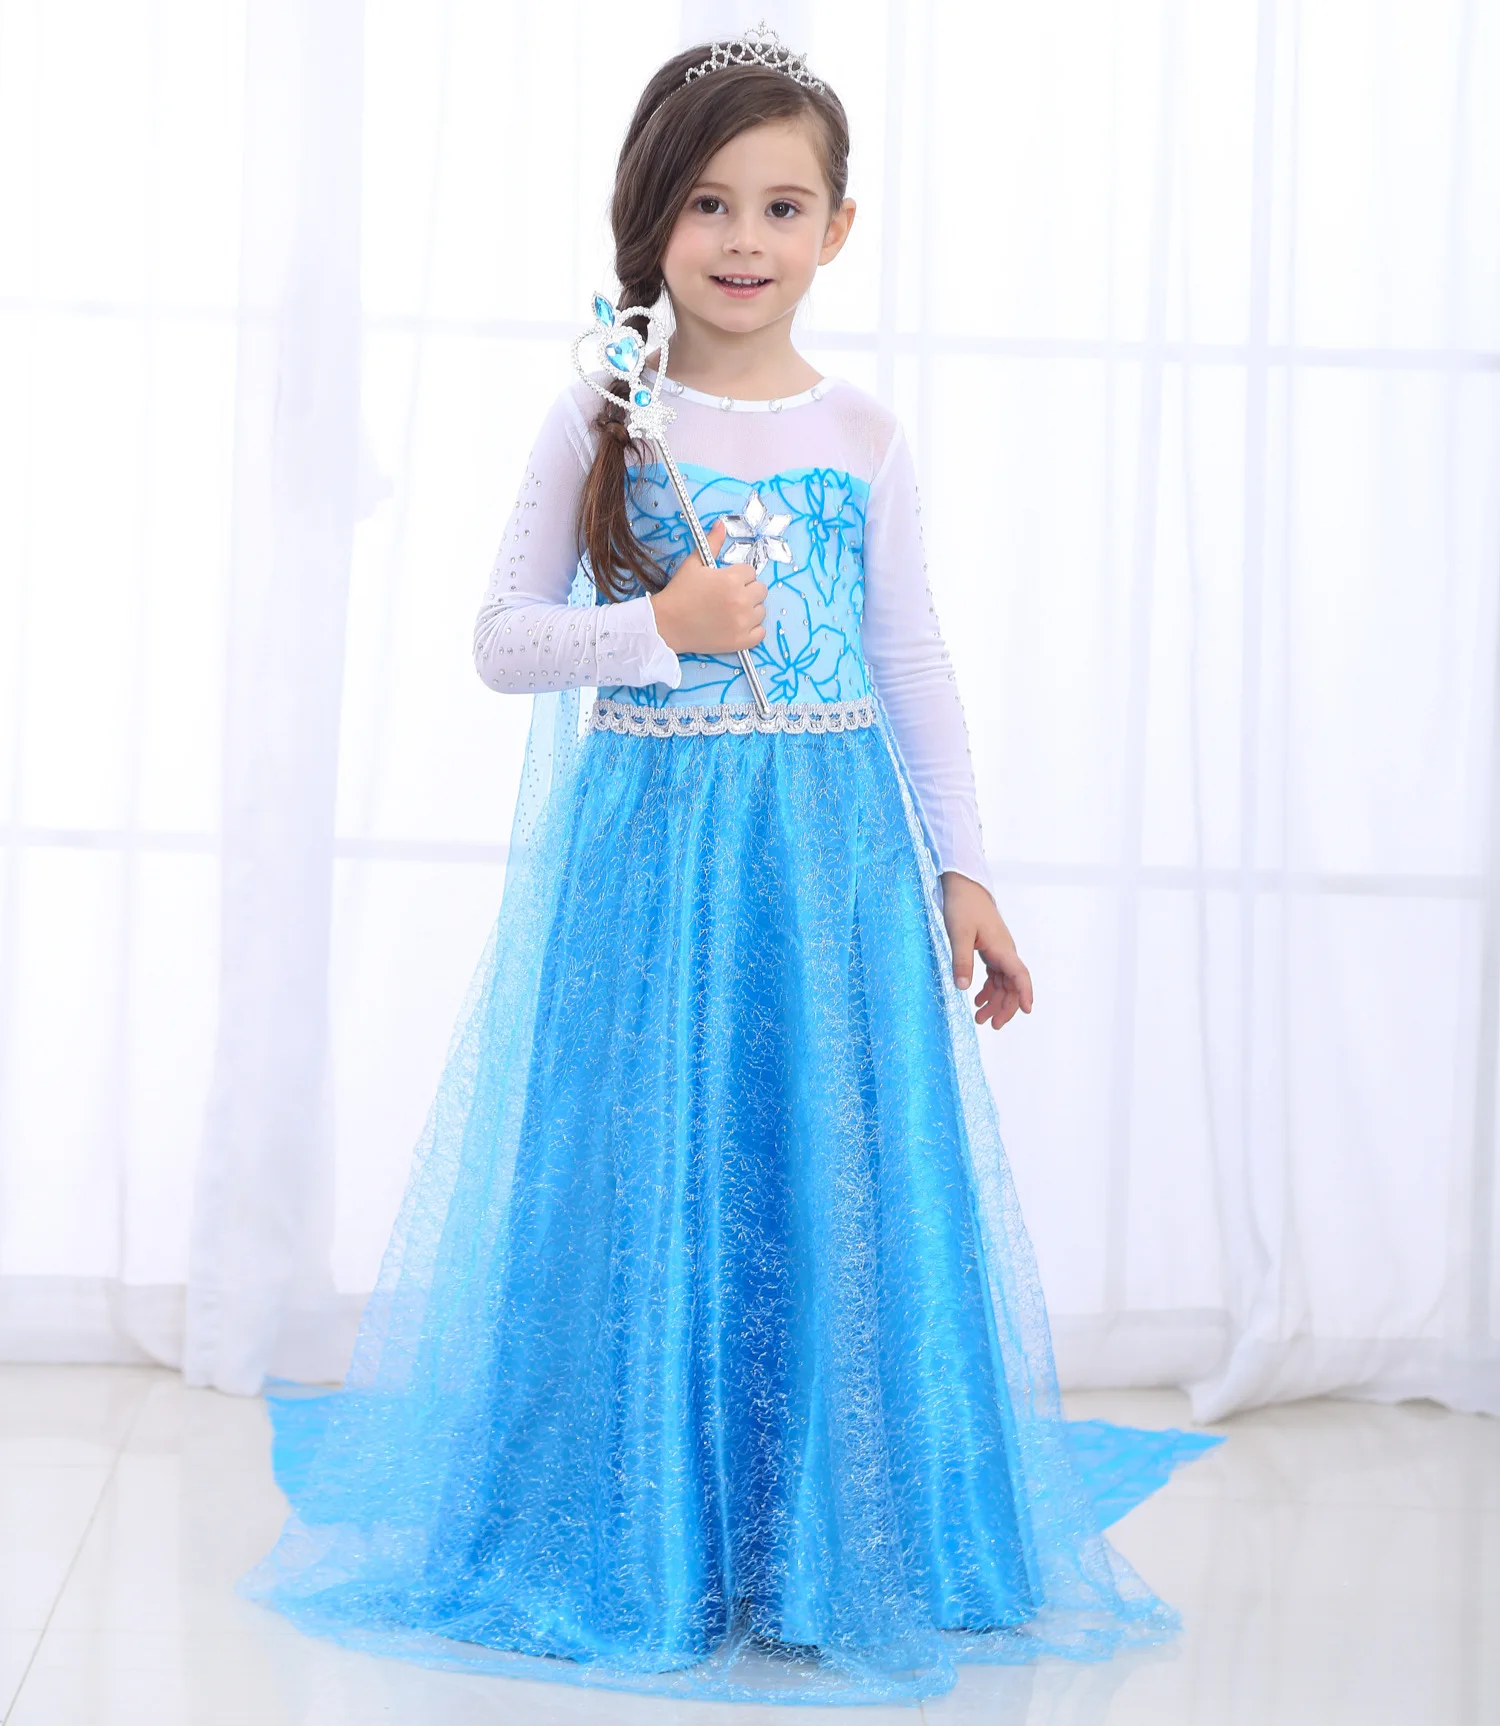 

MQATZ New Kids Girls Fancy Elsa Anna Snow white belle Cinderella Princess Costume Deluxe Dress Up Cosplay Birthday Party, Blue